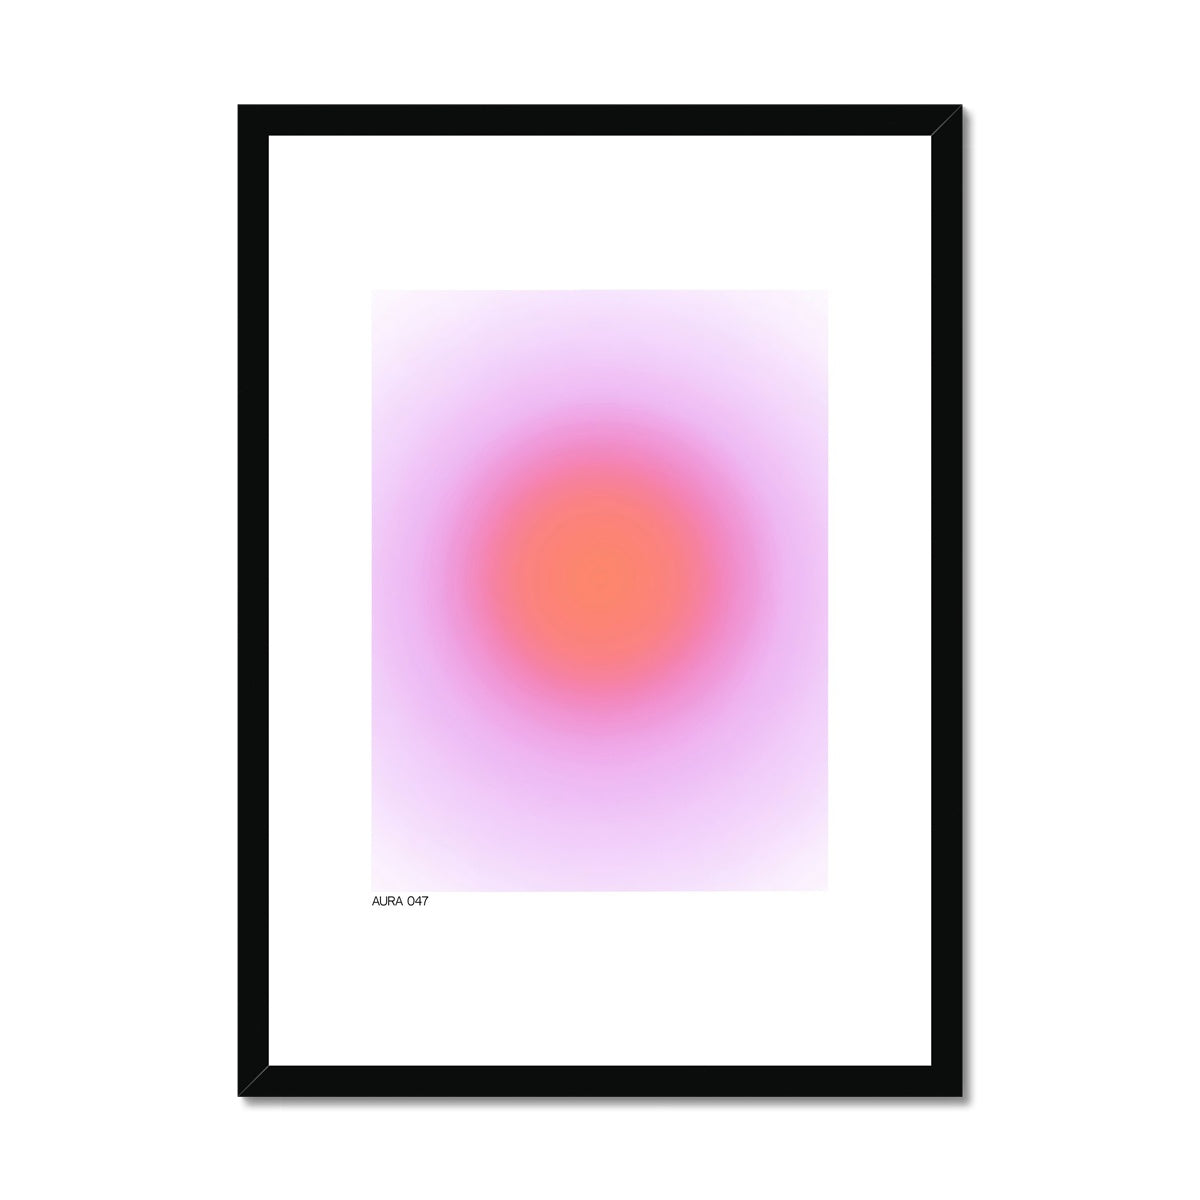 aura 047 Framed & Mounted Print